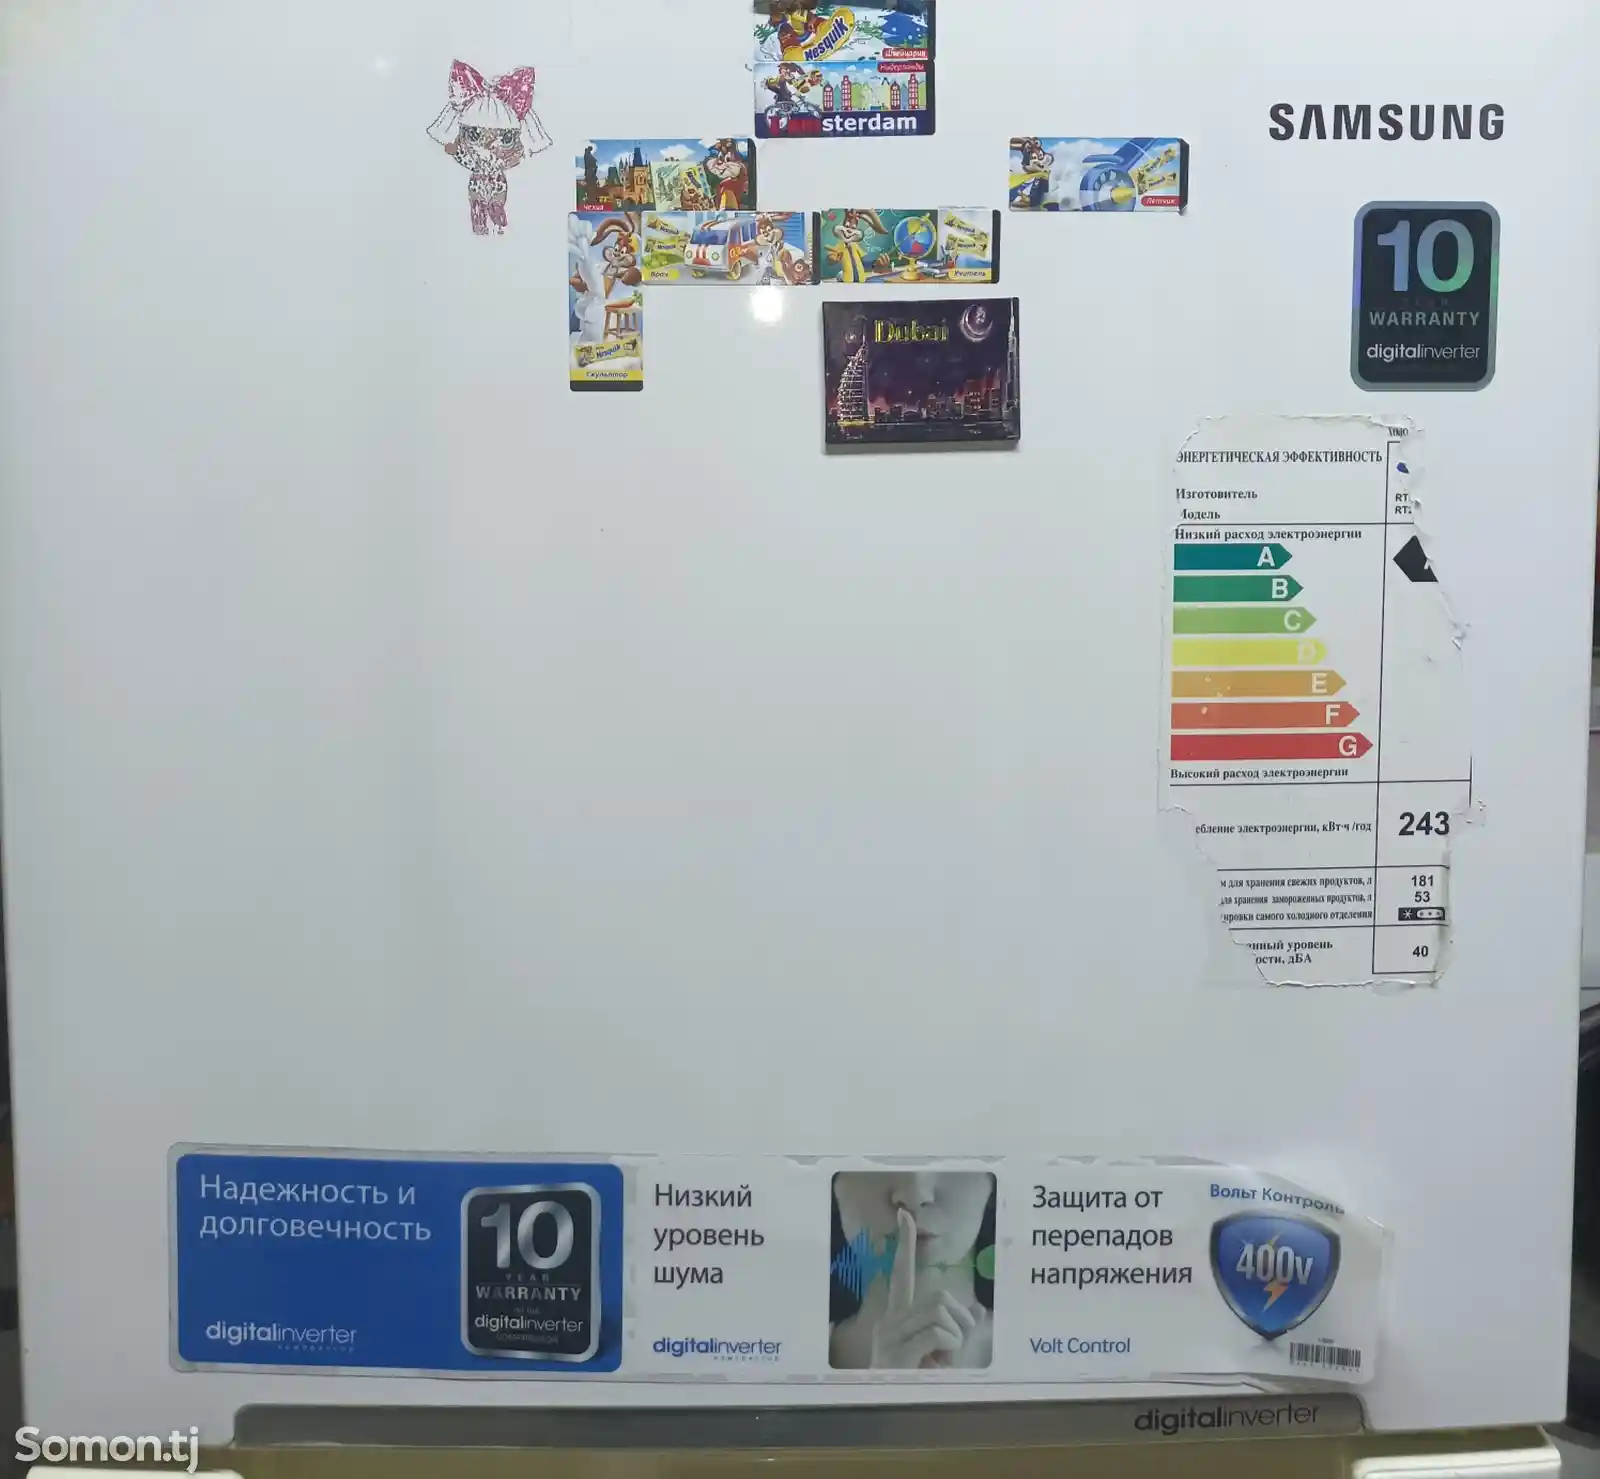 Холодильник Samsung Digital Inverter-2